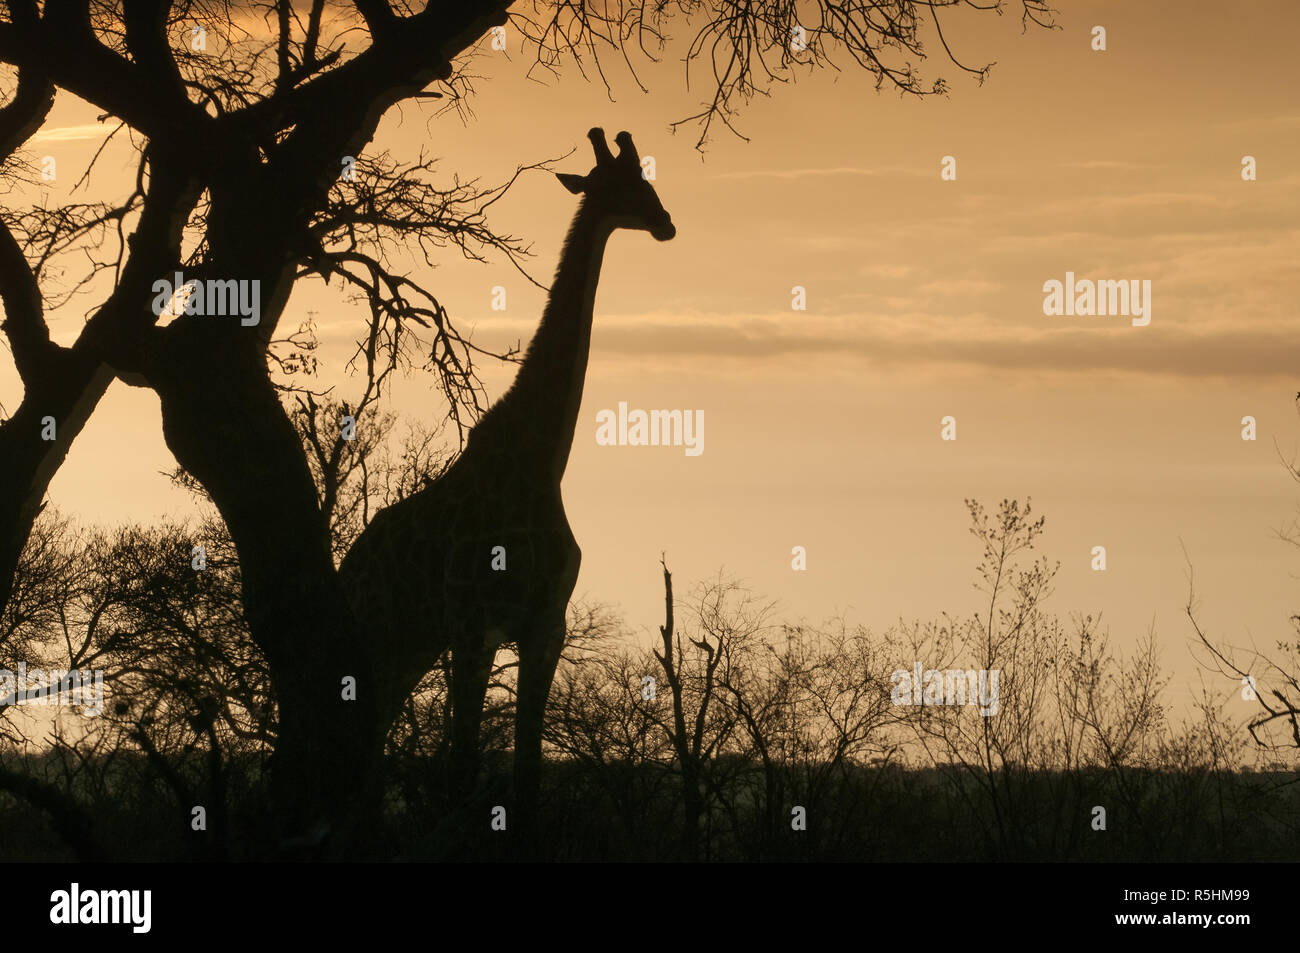 One giraffe in Kruger national park Stock Photo